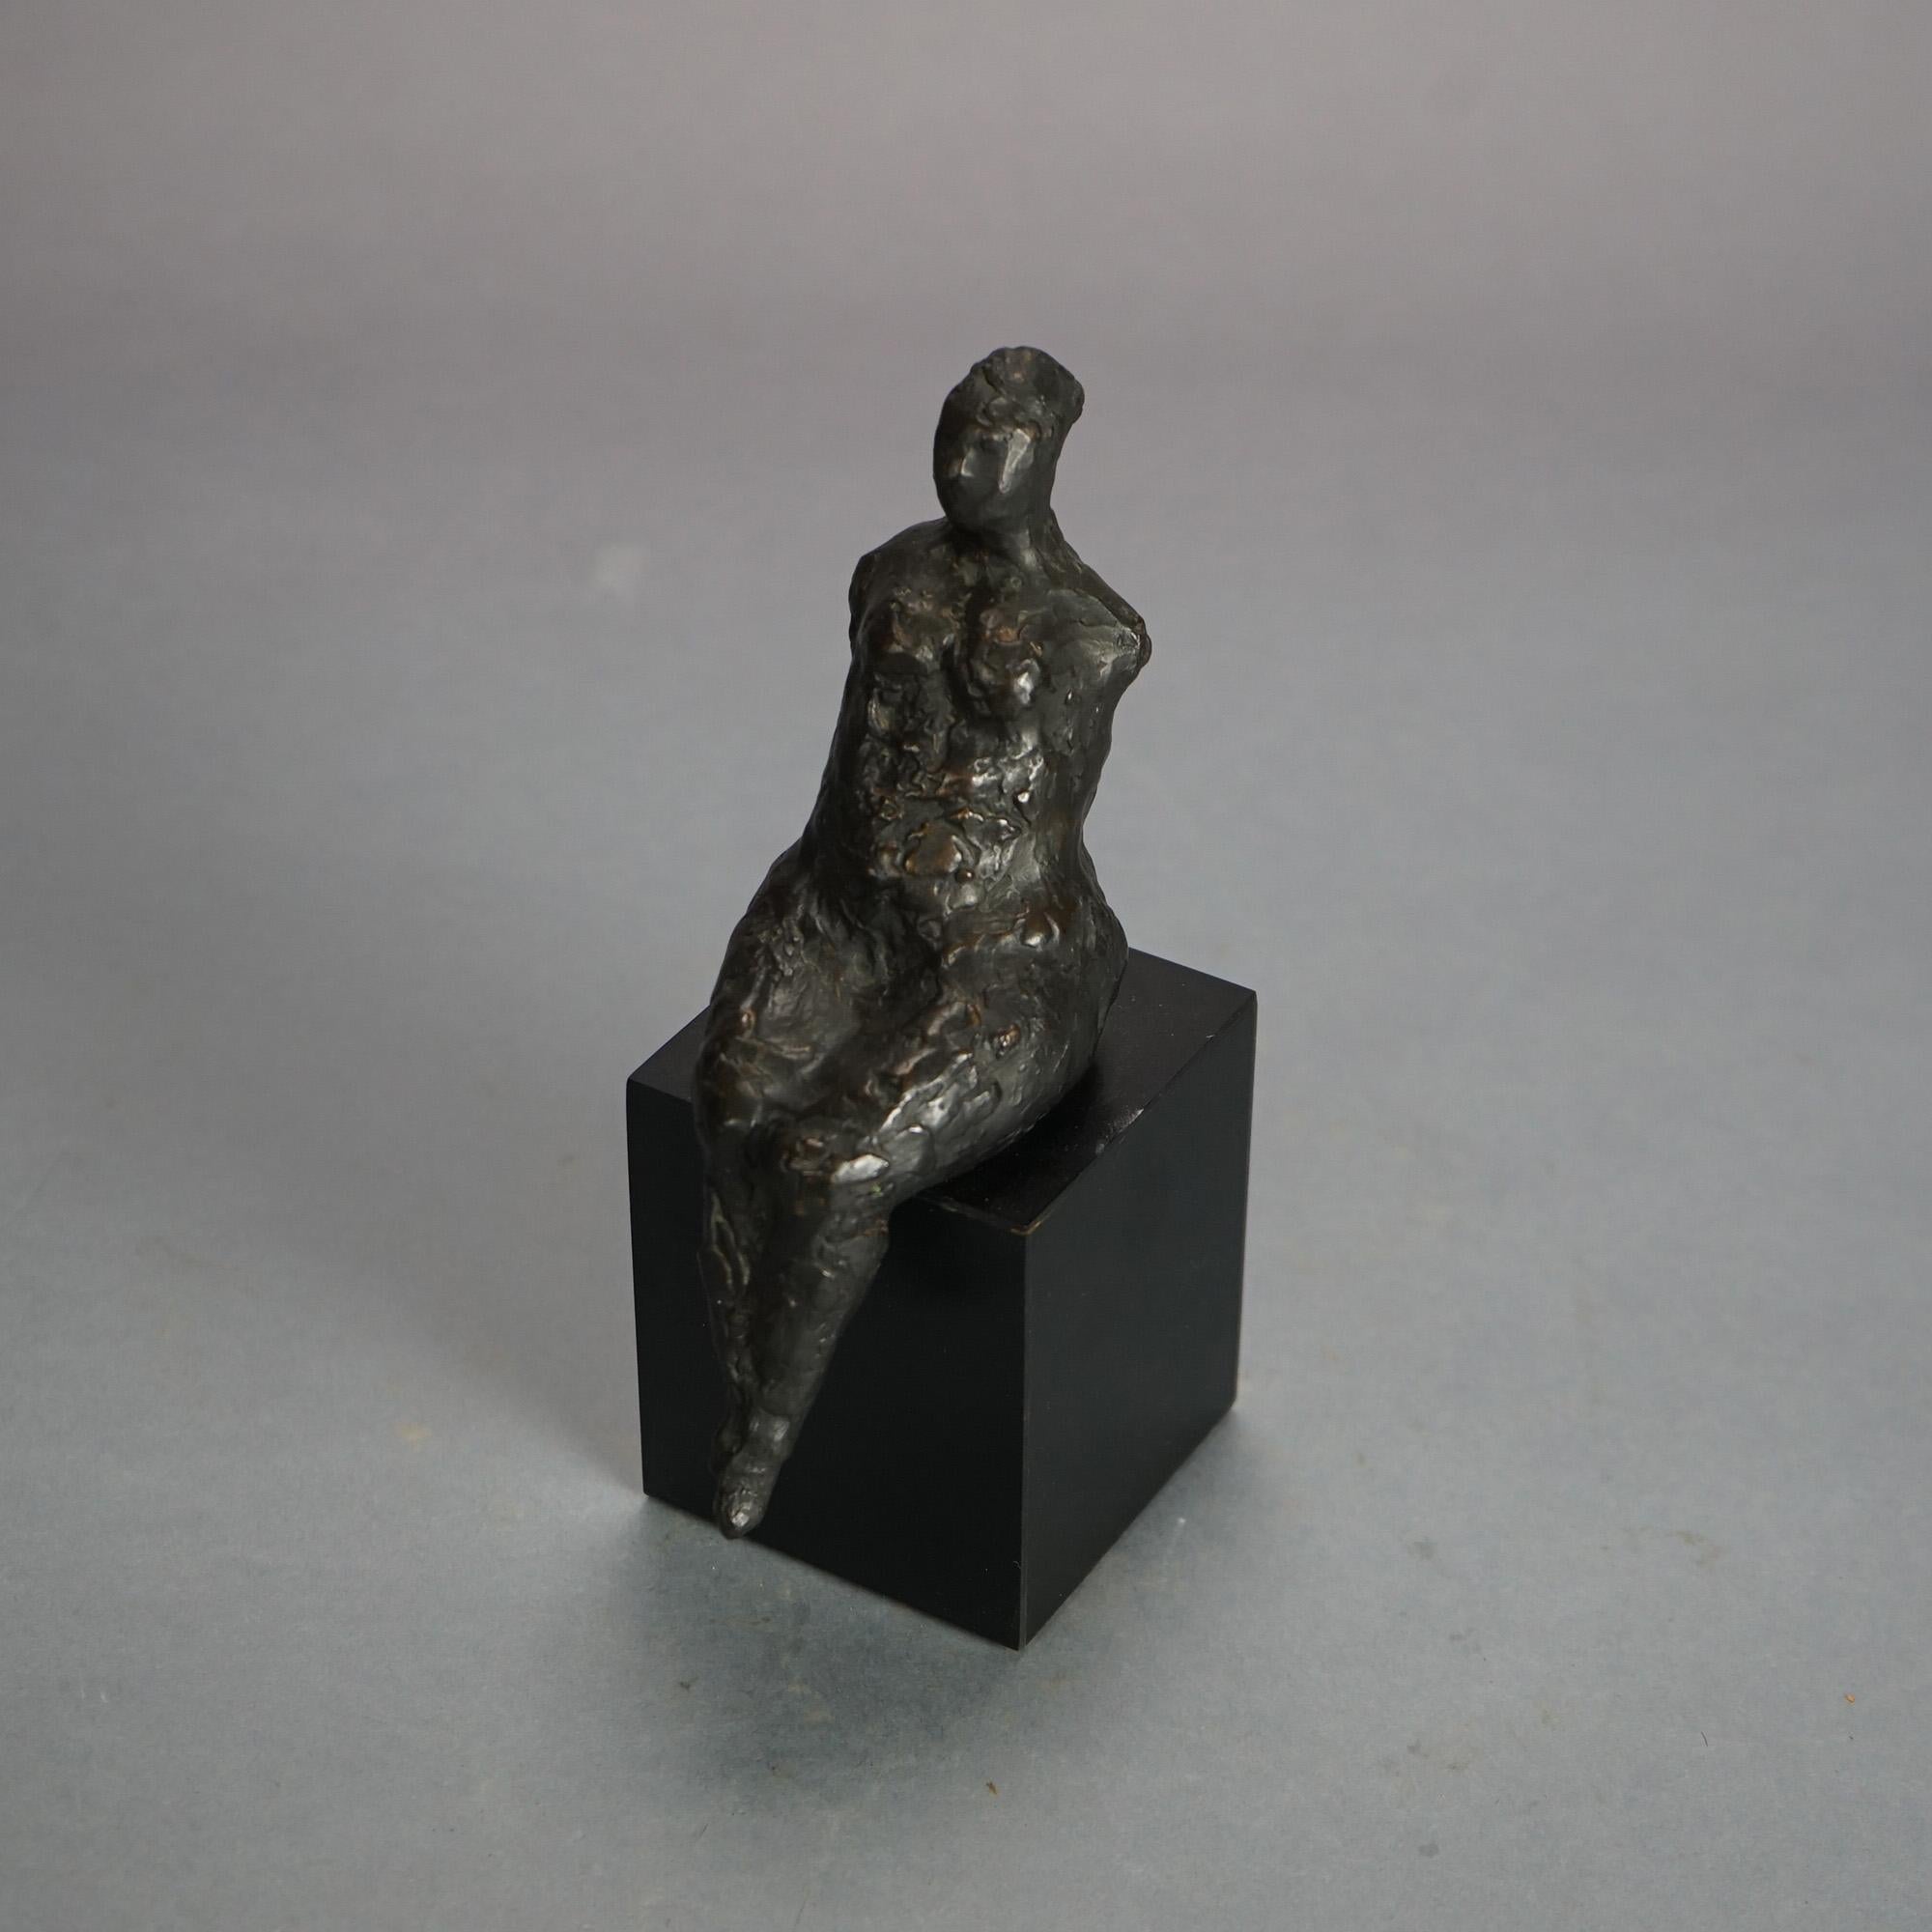 Leonard Schwartz Abstract Bronze Seated Female Figure C1950

Measures - 8.5